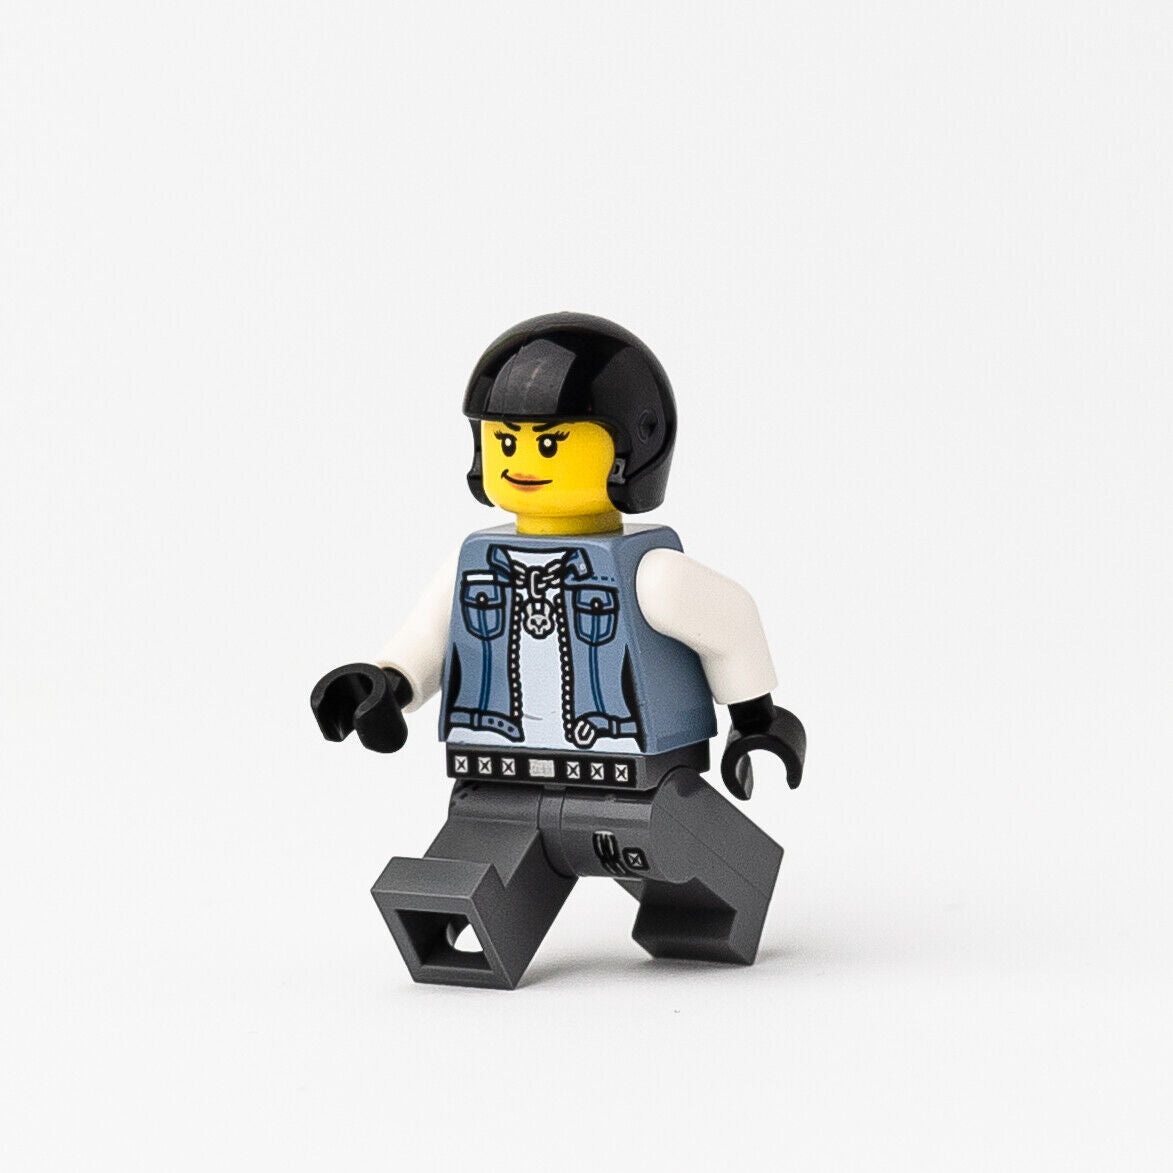 New LEGO Joey Motorcycle Minifigure - Hidden Side - 70421 (hs026)